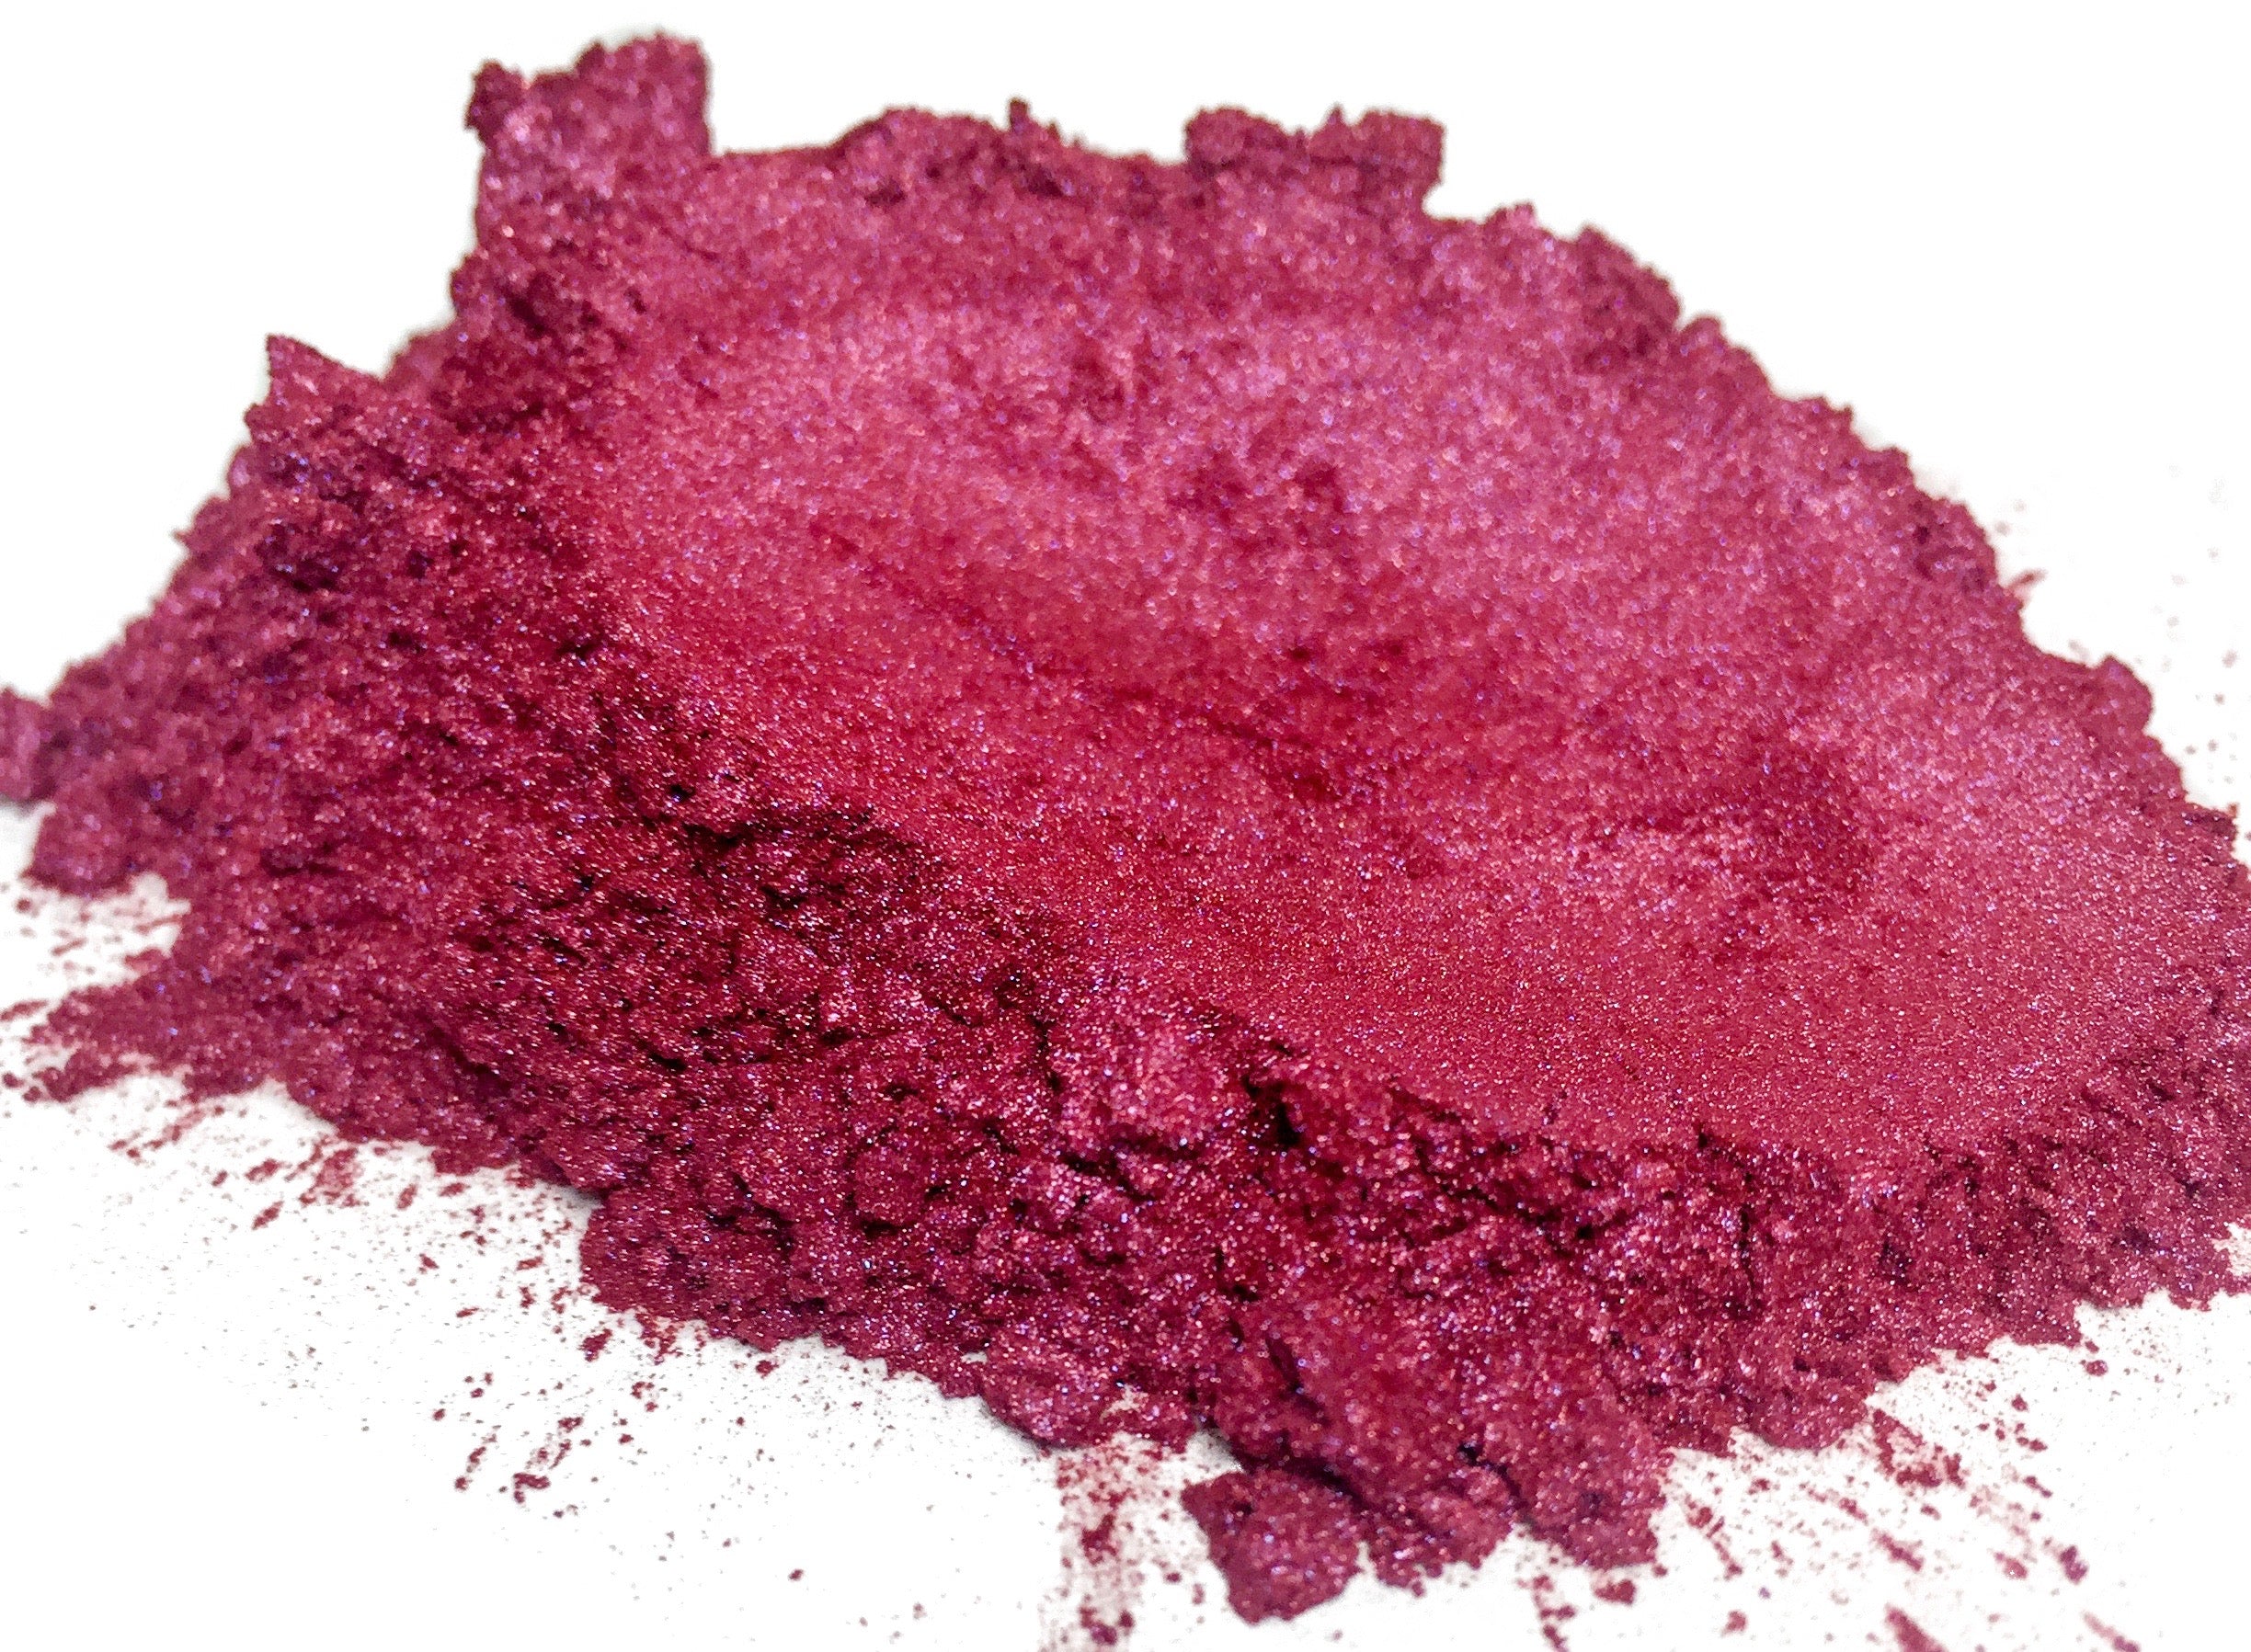 Black Diamond Pigments - Mica Powder - Blood Red - 51 Grams